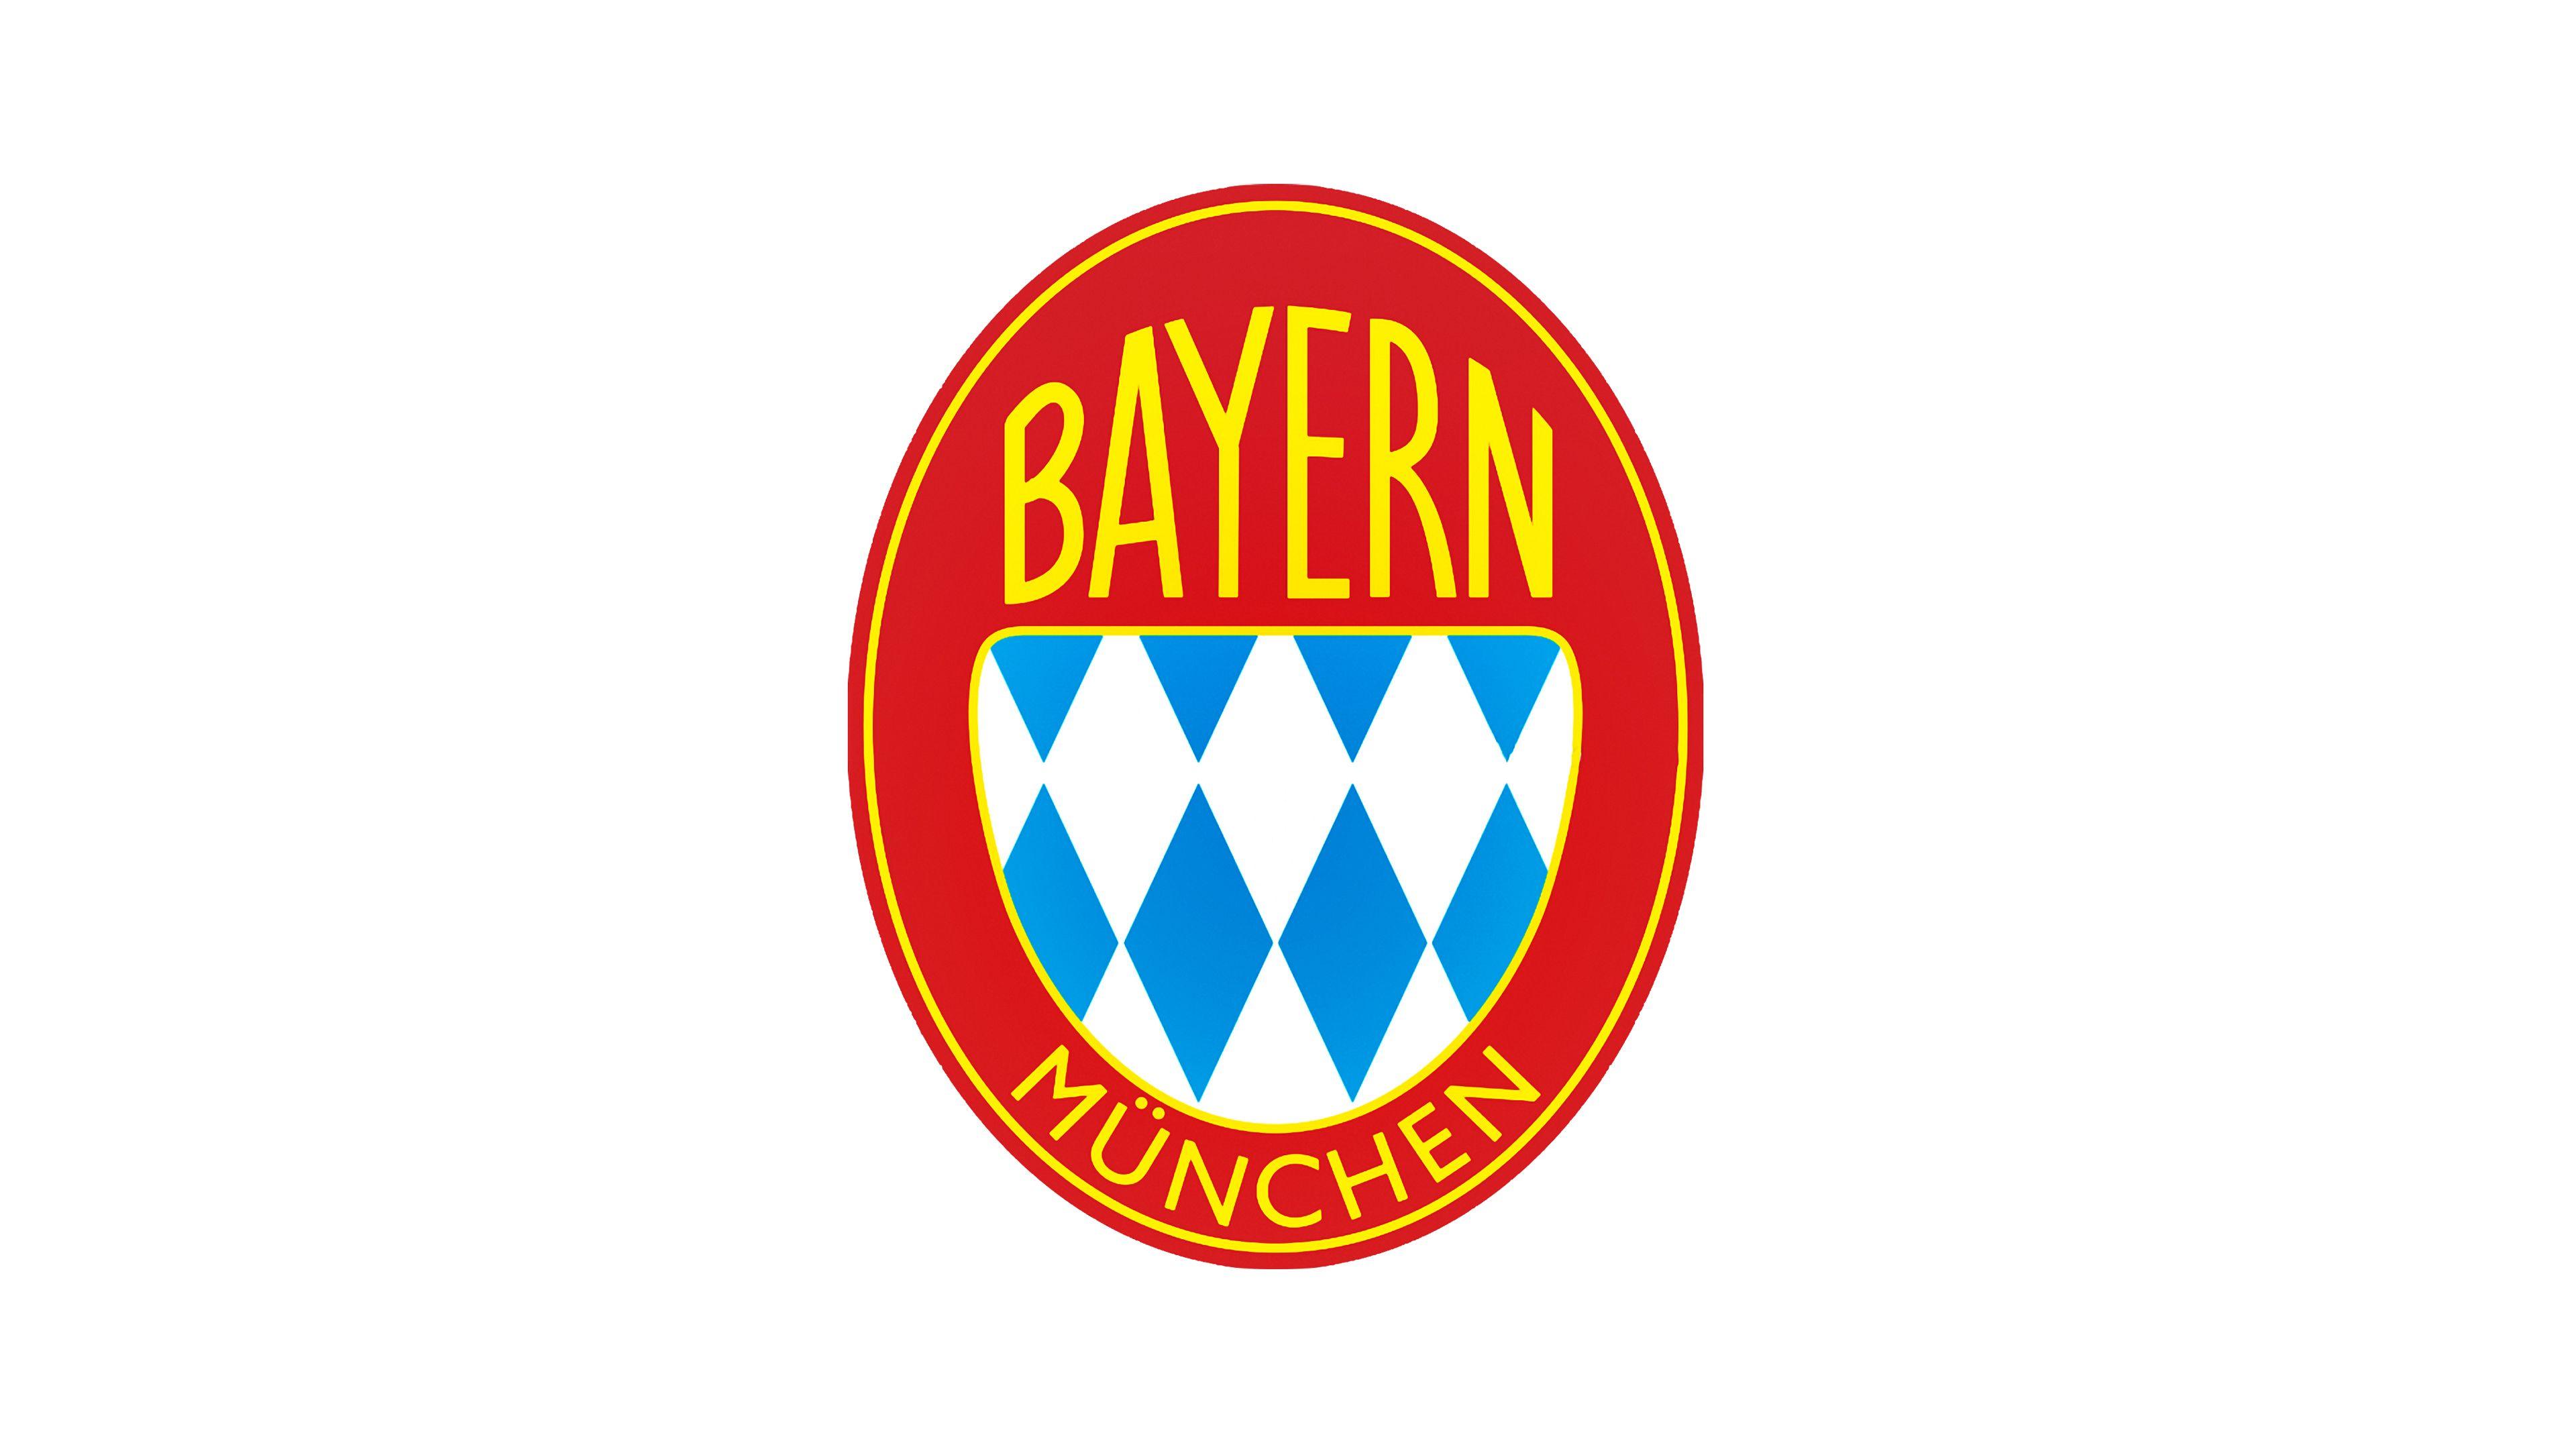 1965 Logo - FC Bayern München logo - Interesting History of the Team Name and emblem